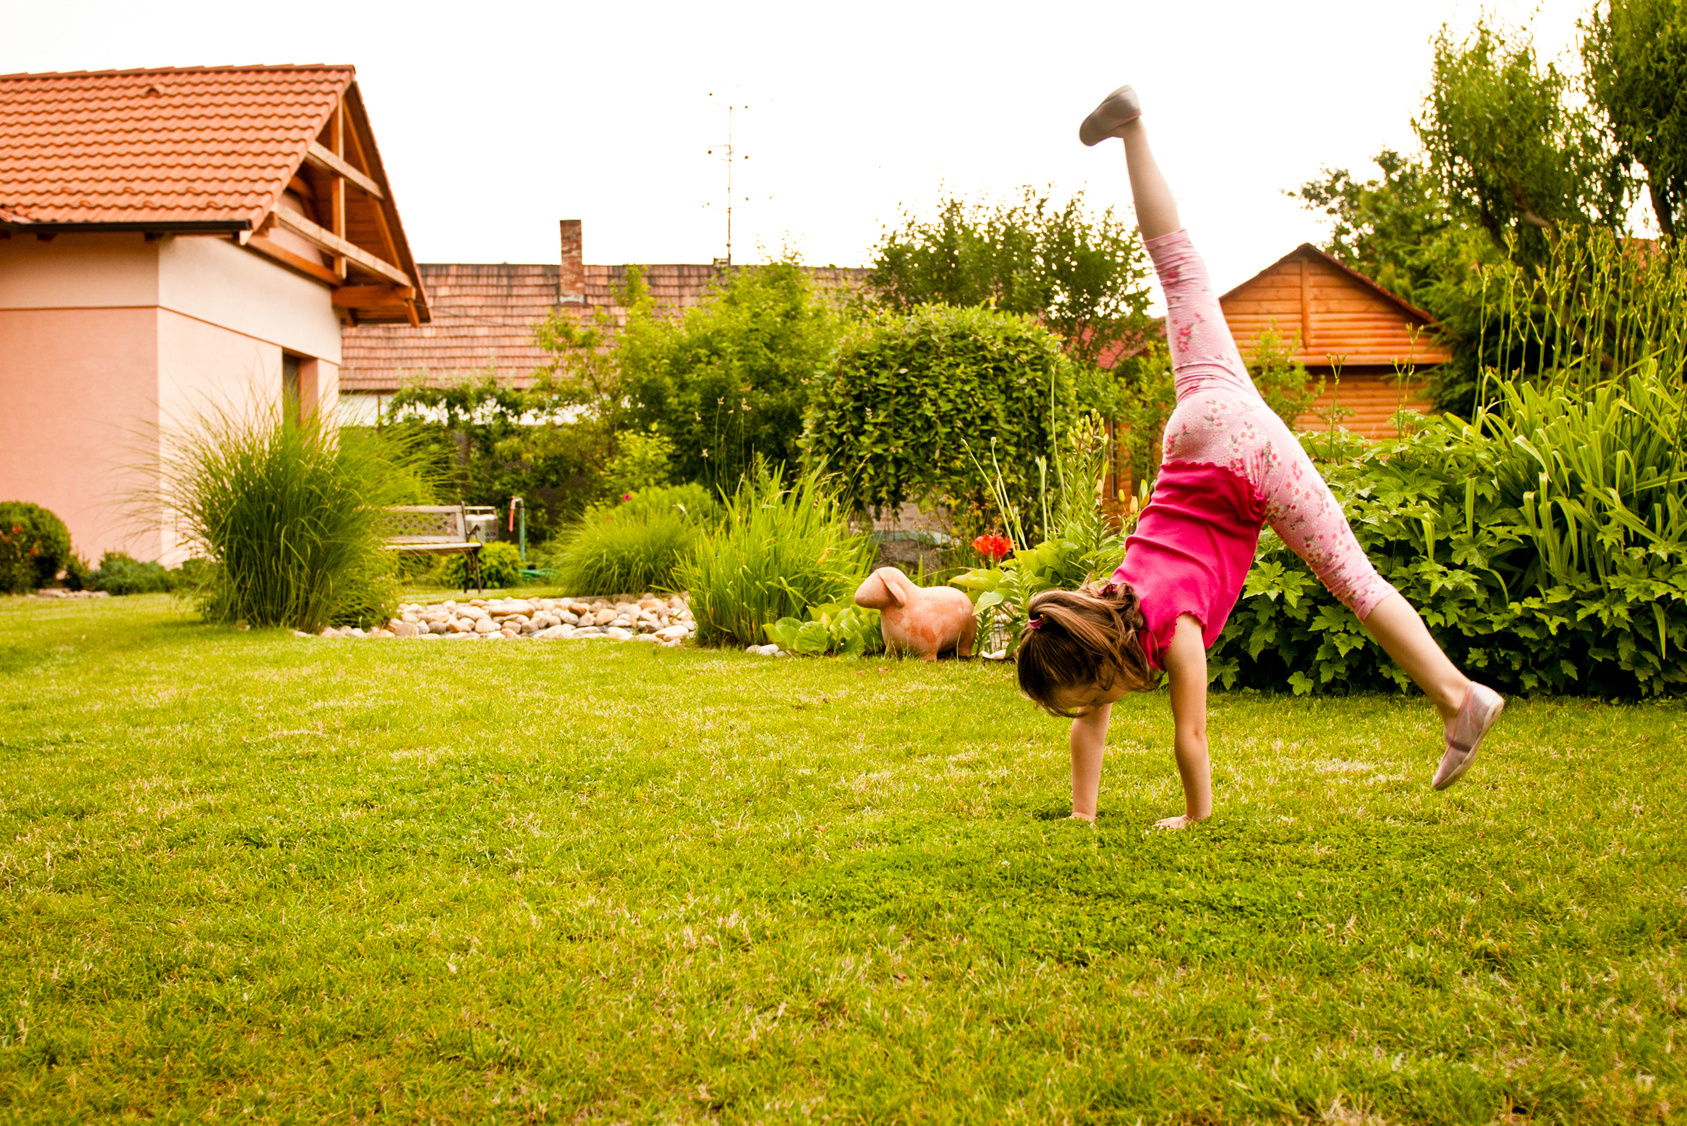 Girl doing a cartwheel in the yard